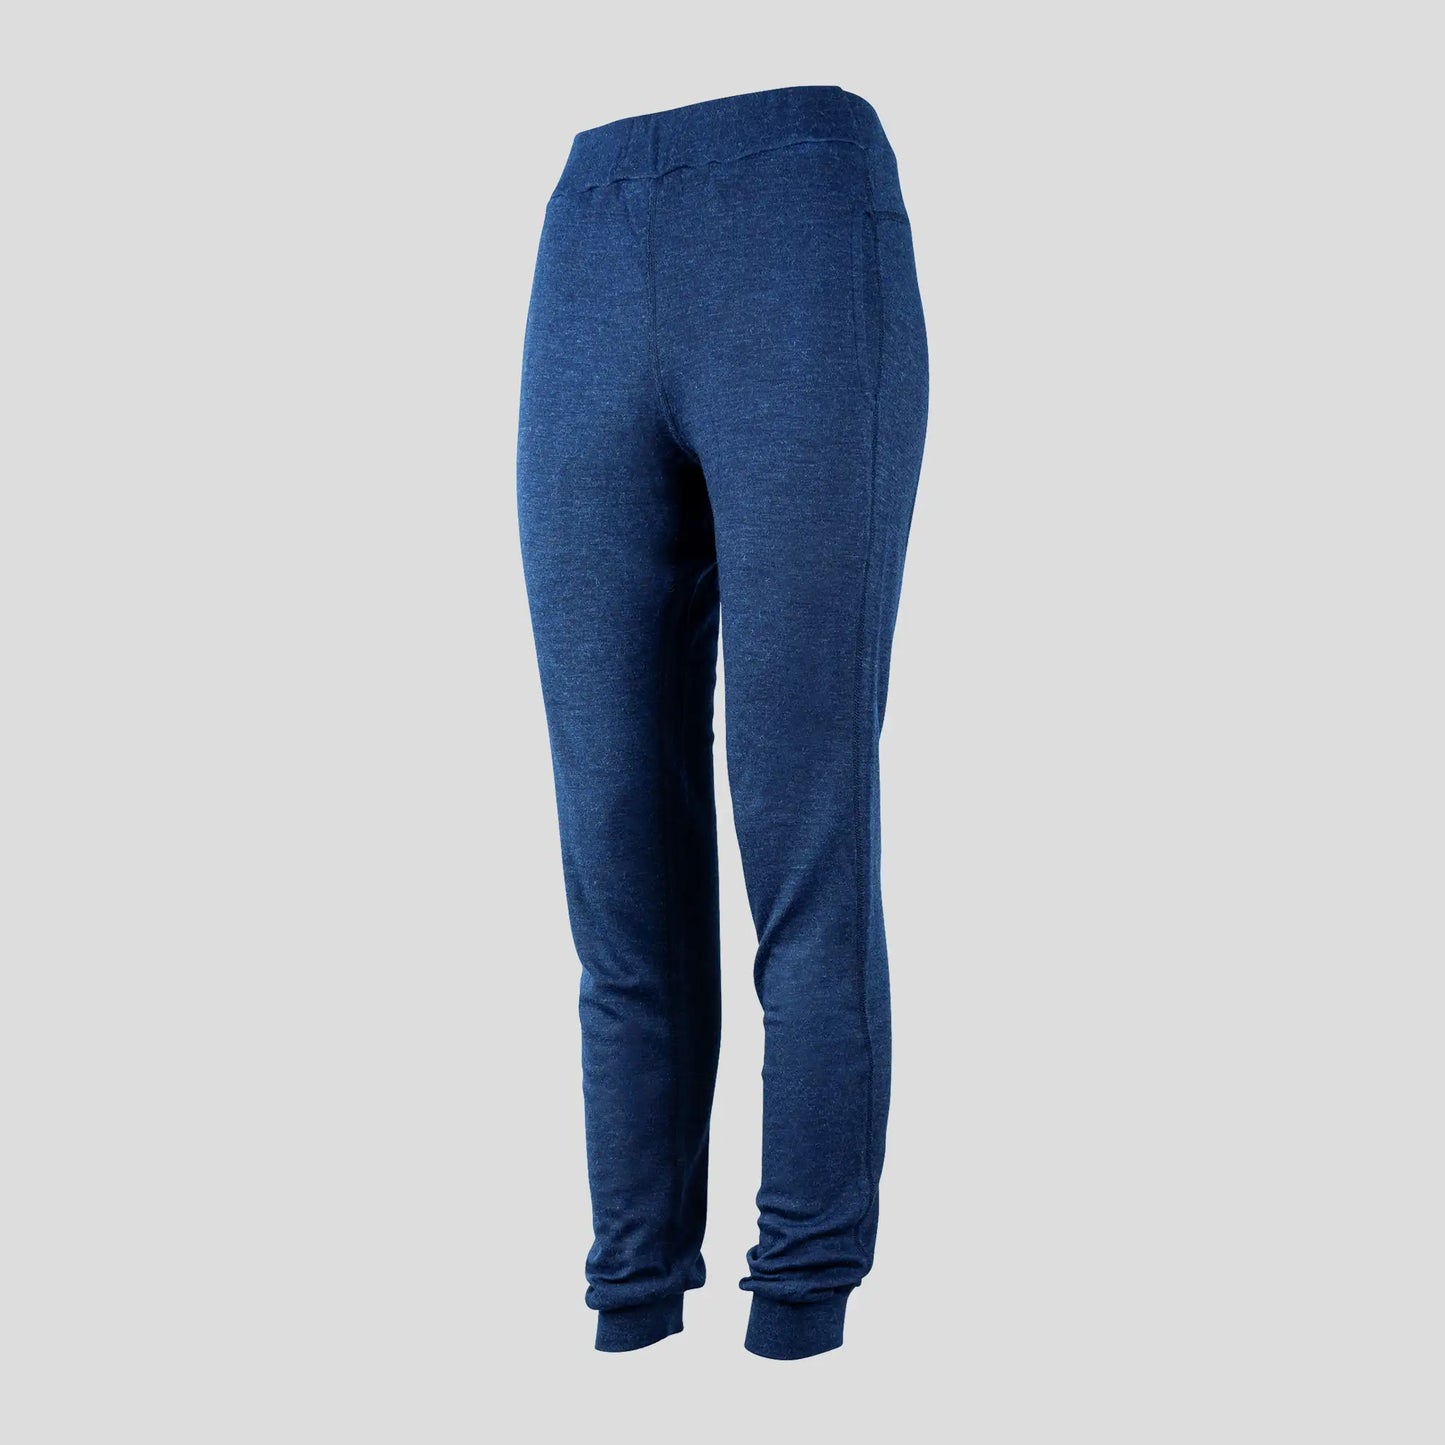 Hanro of Switzerland Ocean-Blue Woolen Lace Legging – CheapUndies